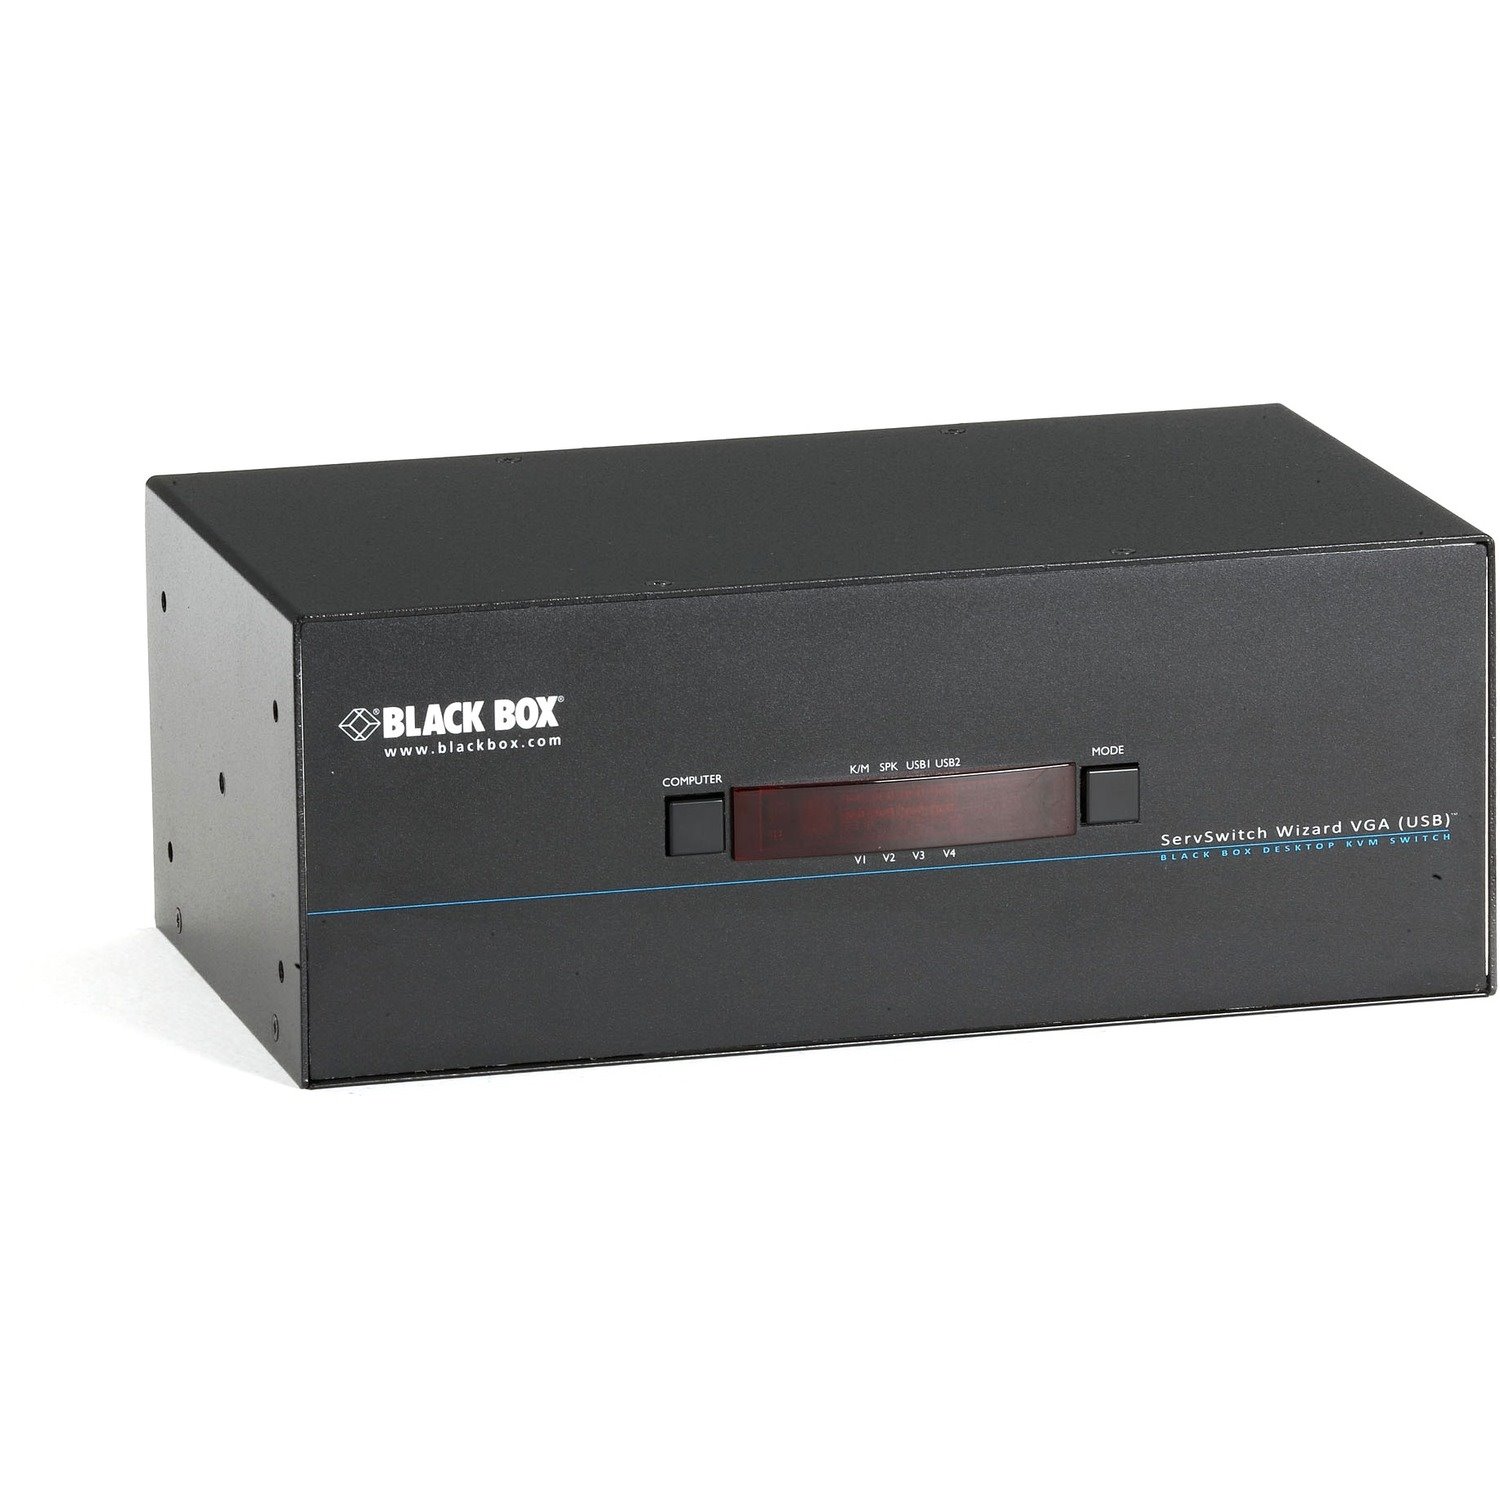 Black Box ServSwitch Wizard VGA, USB, Dual-Head Video